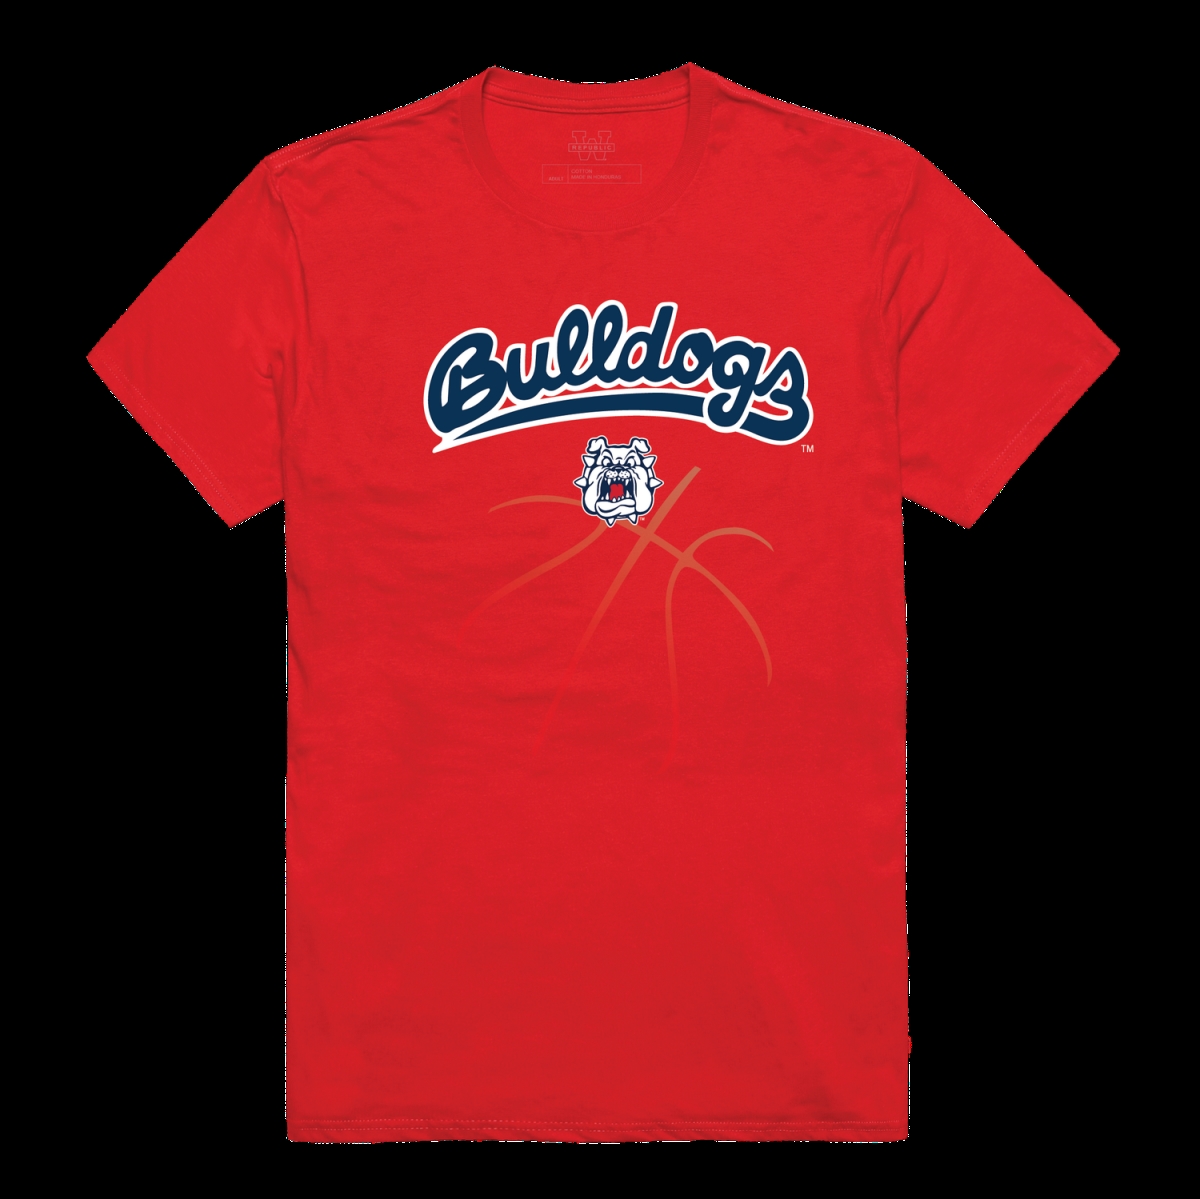 510-169-RED-02 California State University, Fresno Bulldogs College Basketball T-Shirt, Red - Medium -  W Republic